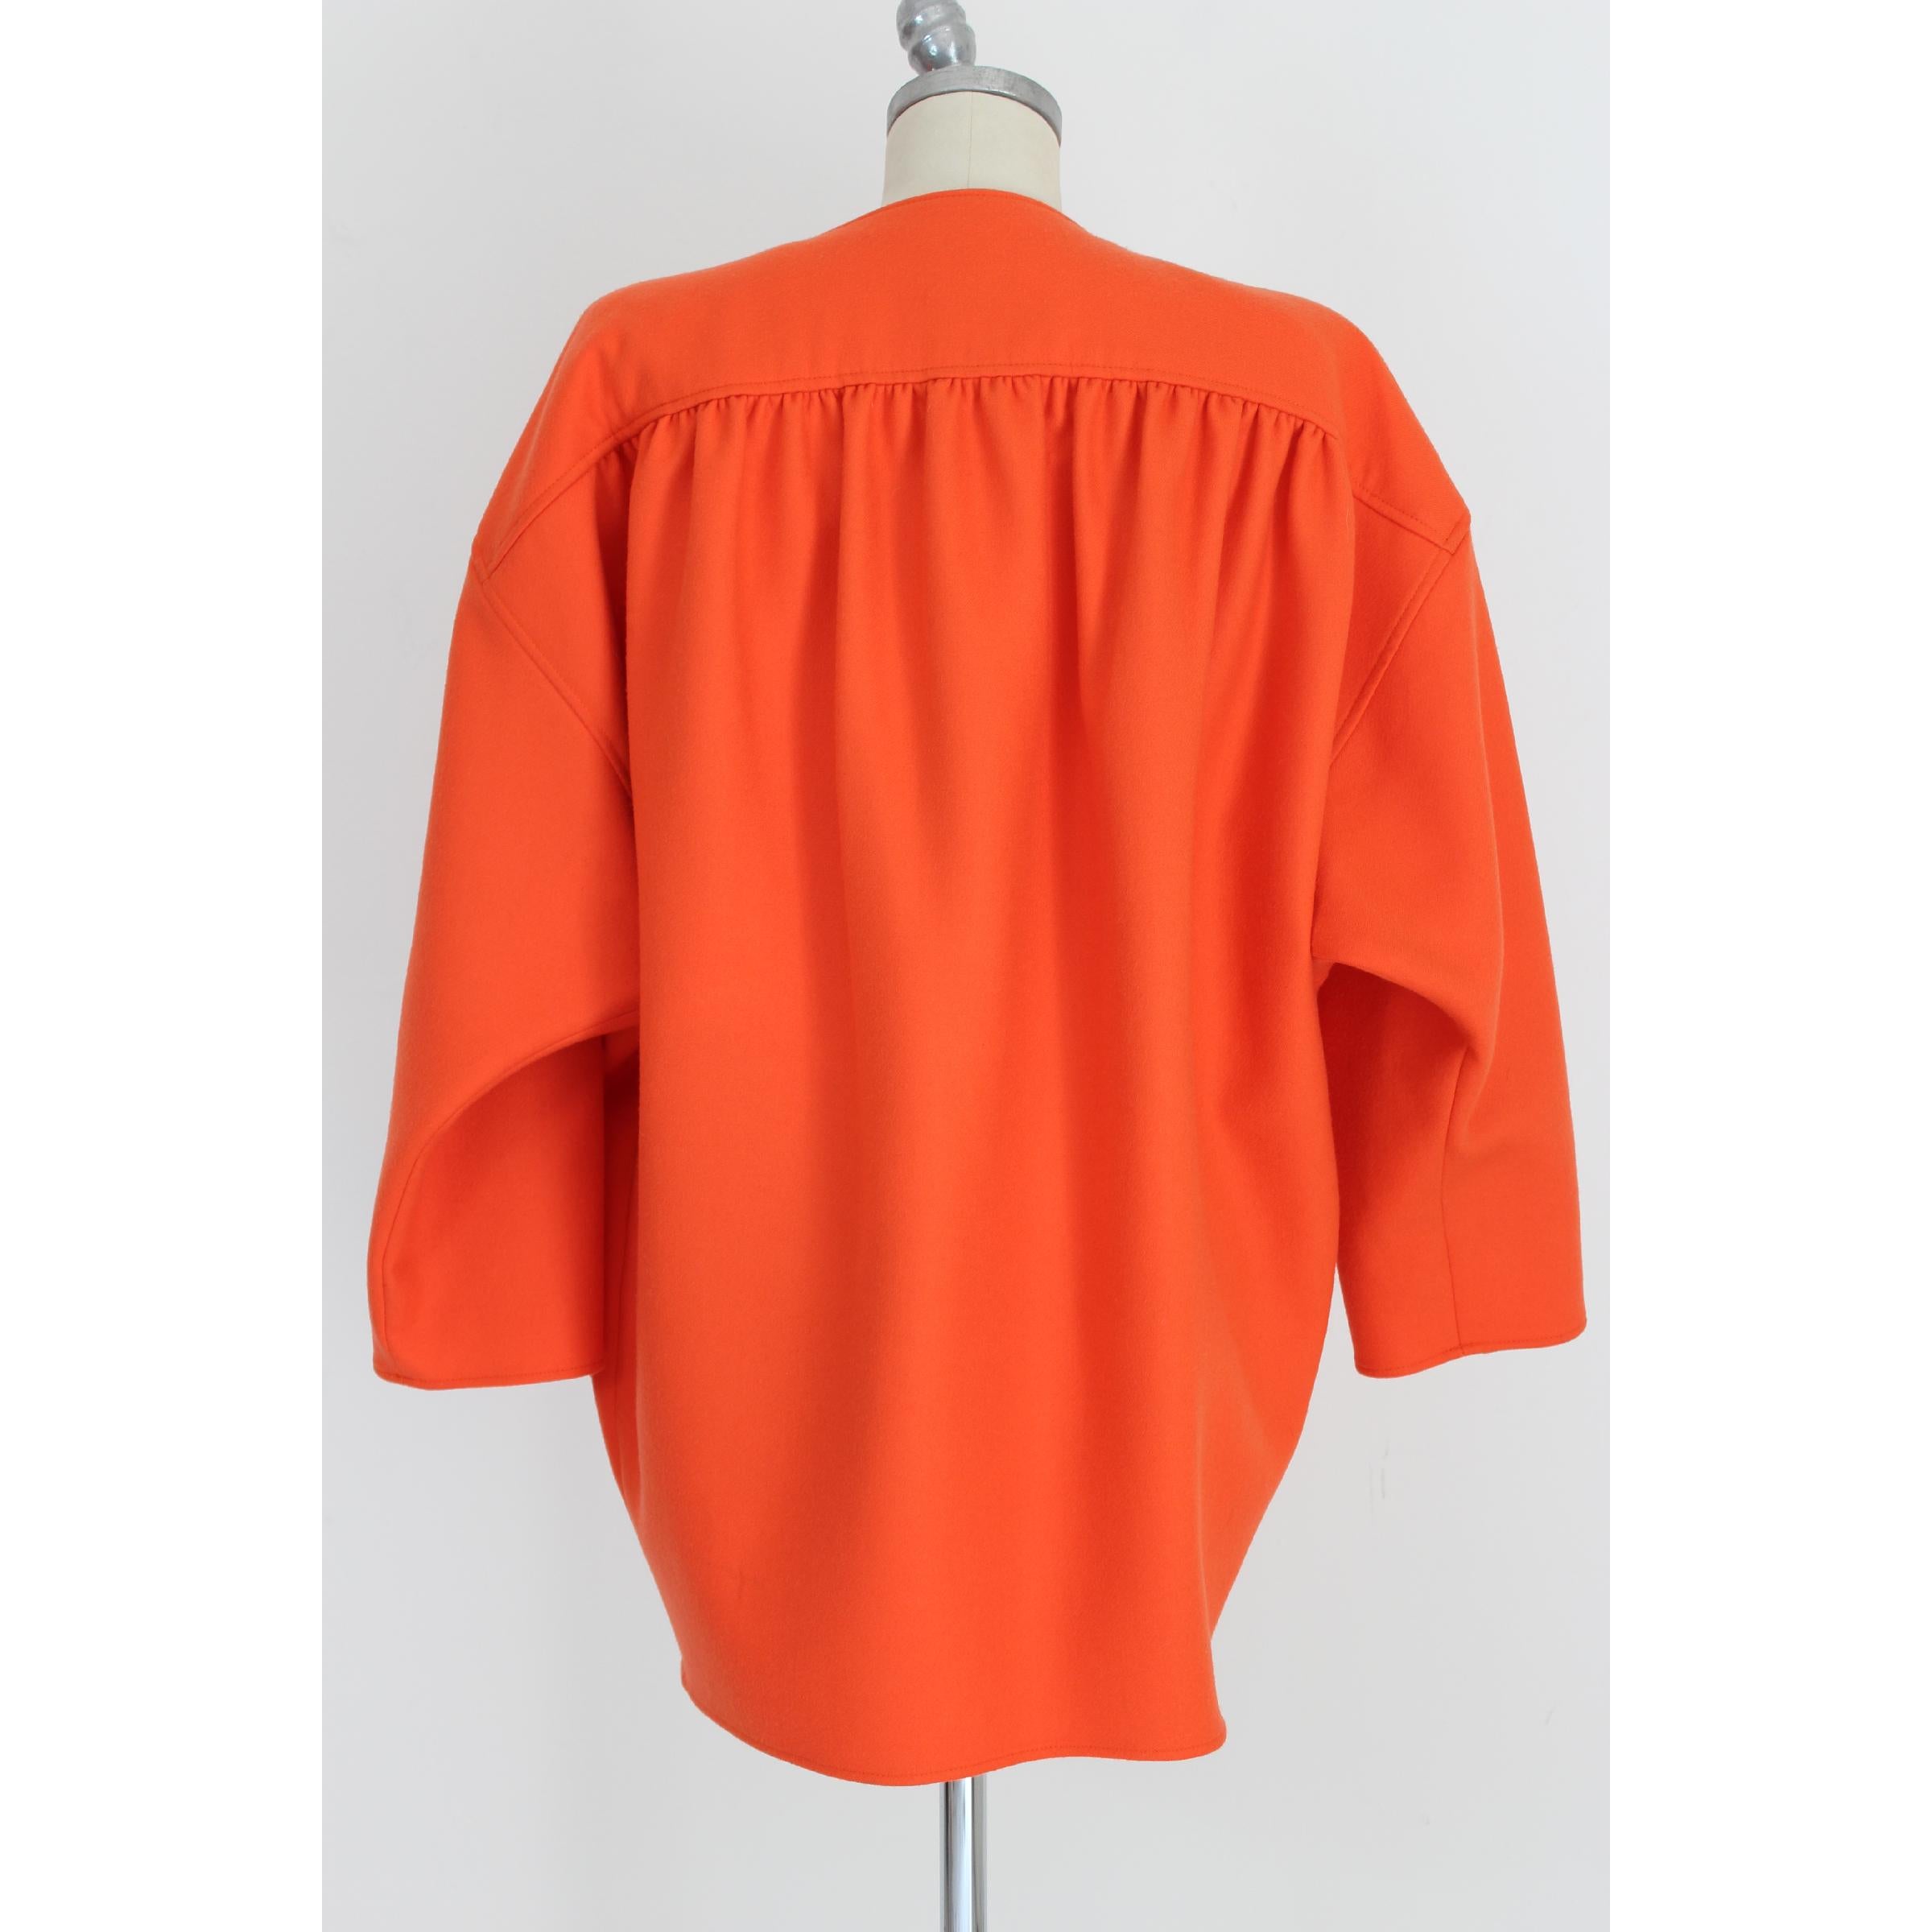 Red Emanuel Ungaro Paris Orange Wool Poncho Batwing Sleeves Coat 1980s